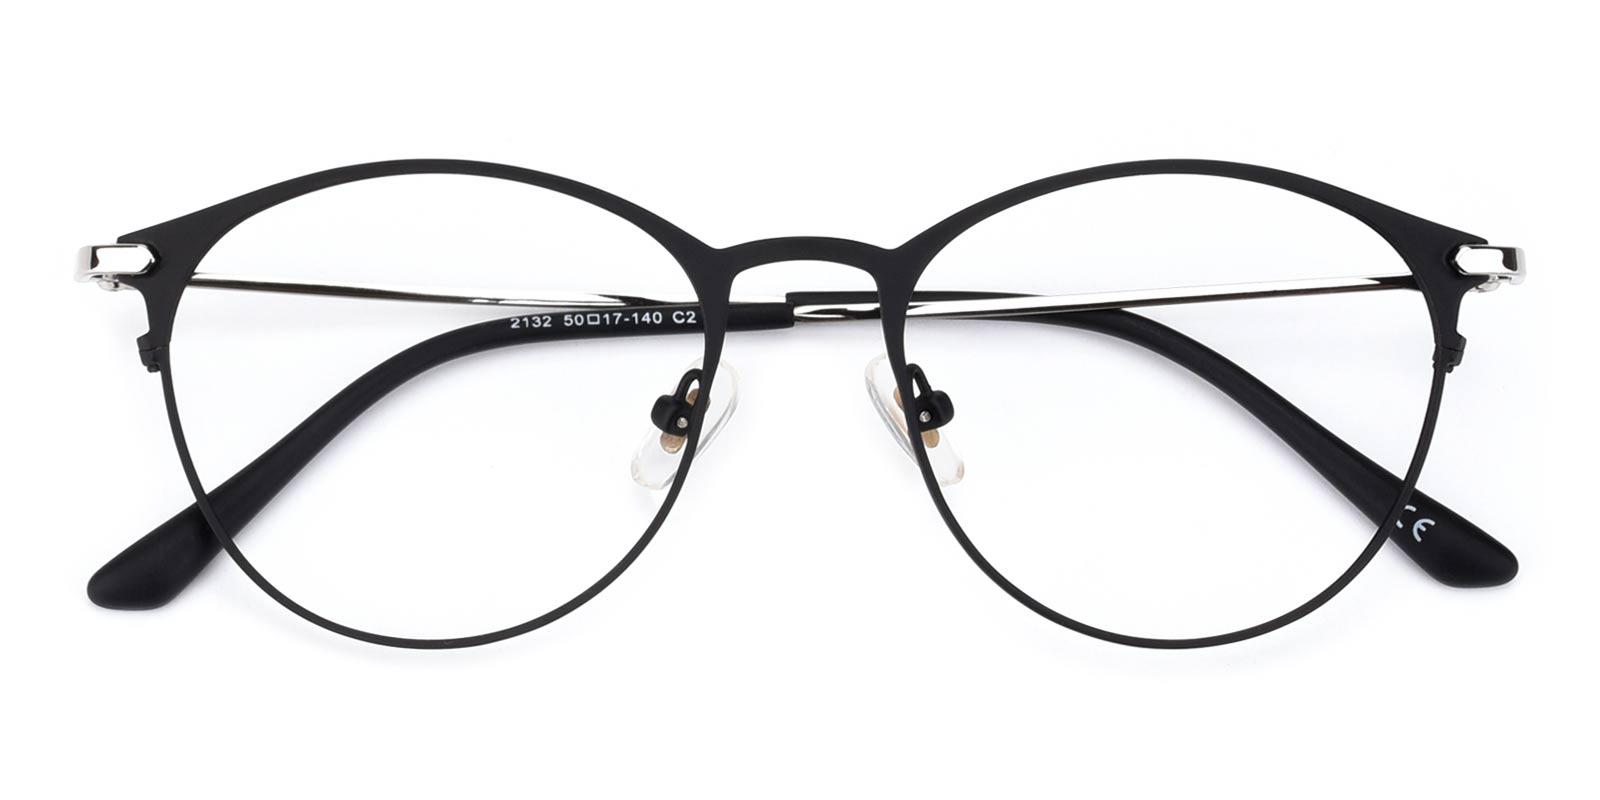 Persisto Black Metal Eyeglasses , Fashion , NosePads Frames from ABBE Glasses